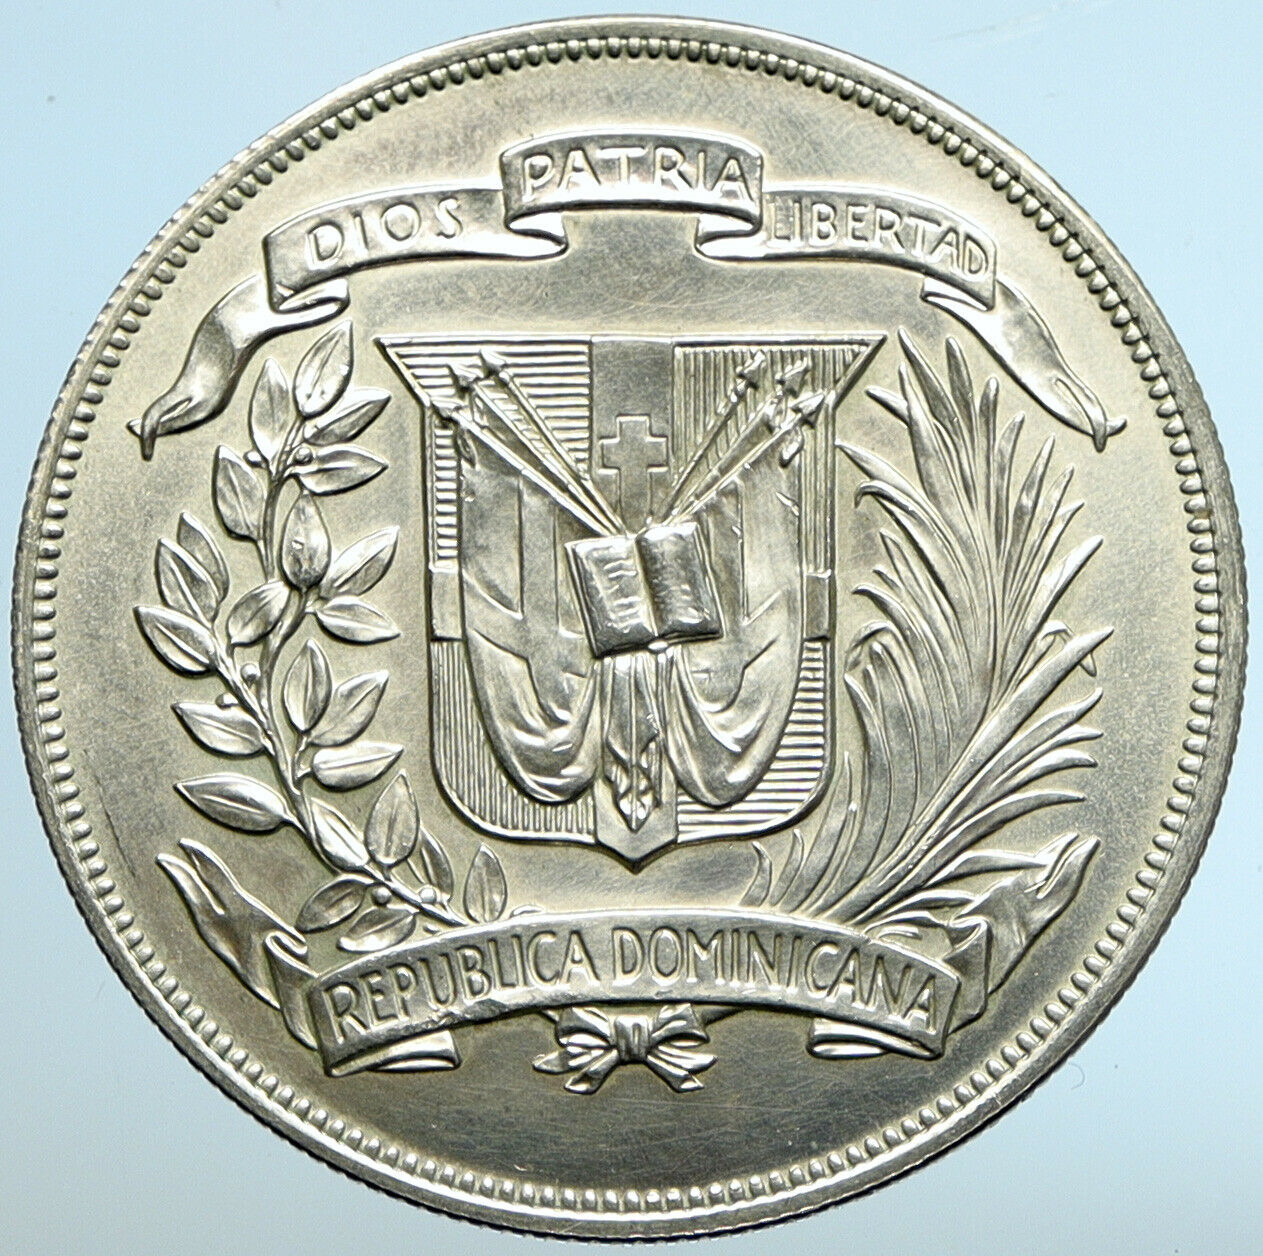 1974 DOMINICAN REPUBLIC 25th Yr Central Bank VINTAGE Silver Peso Coin i102612